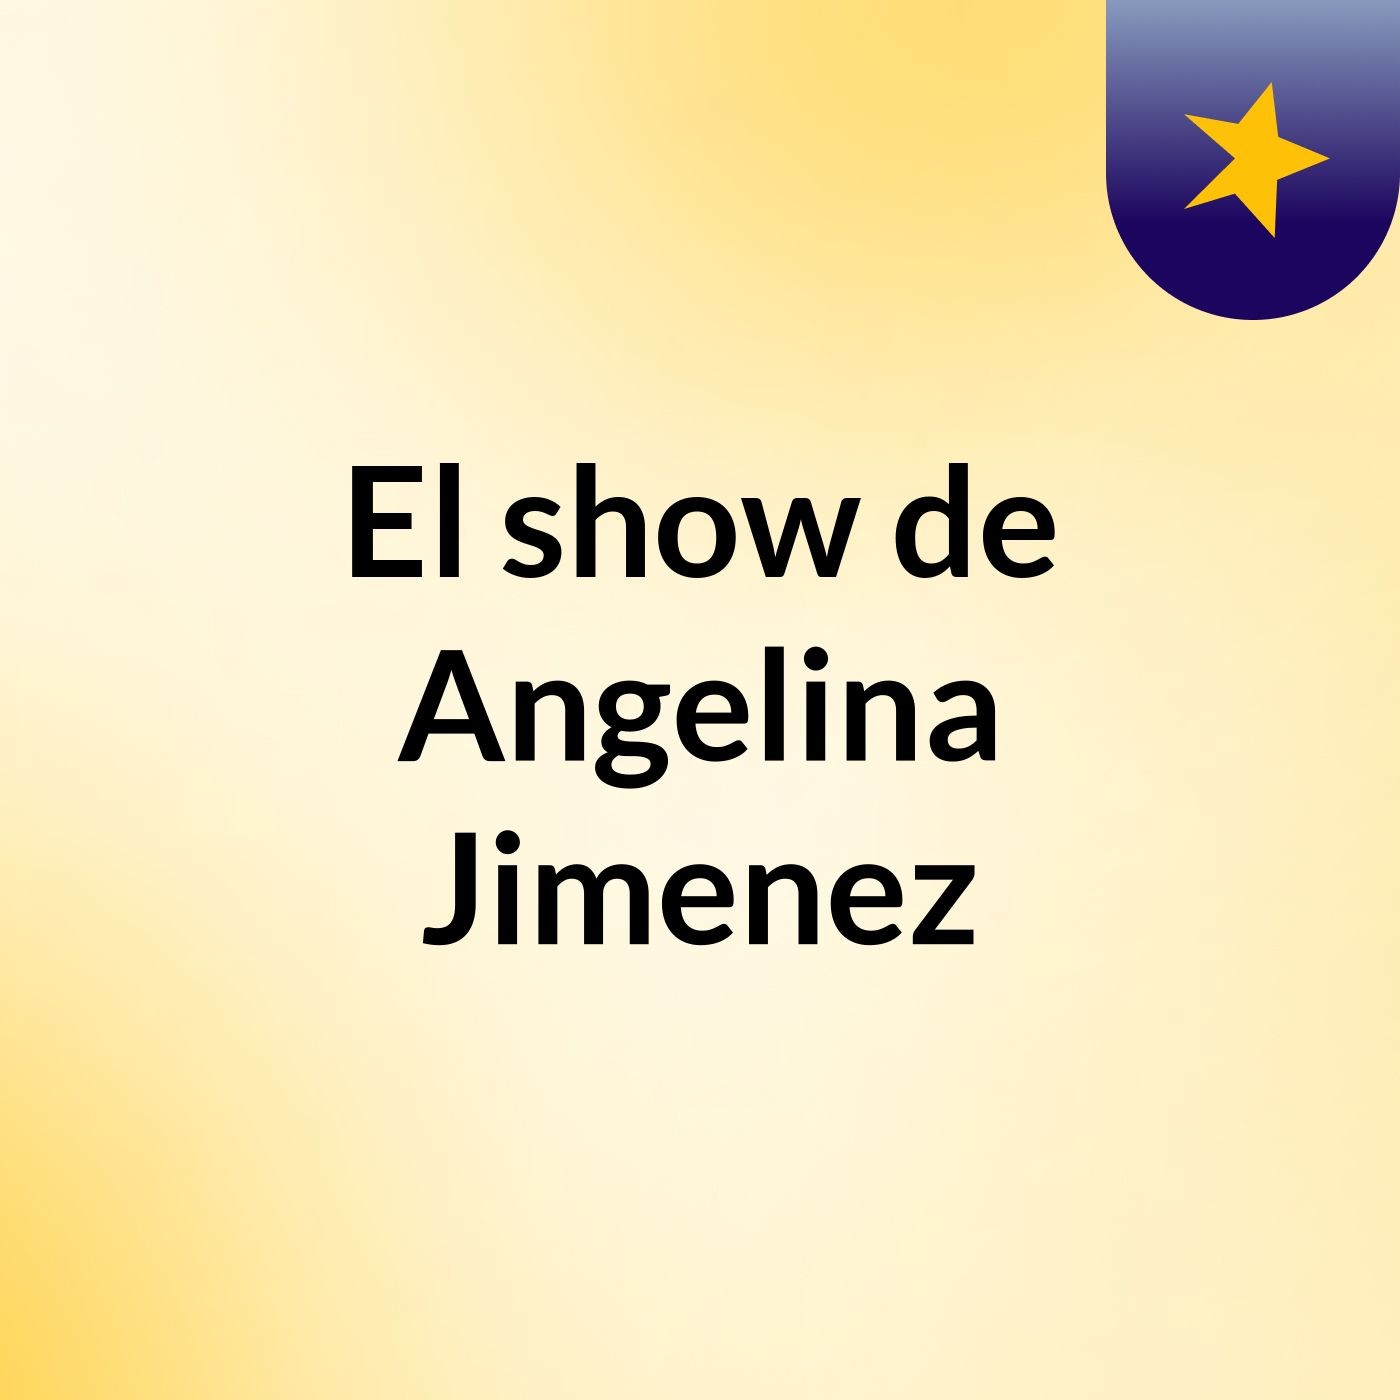 El show de Angelina Jimenez